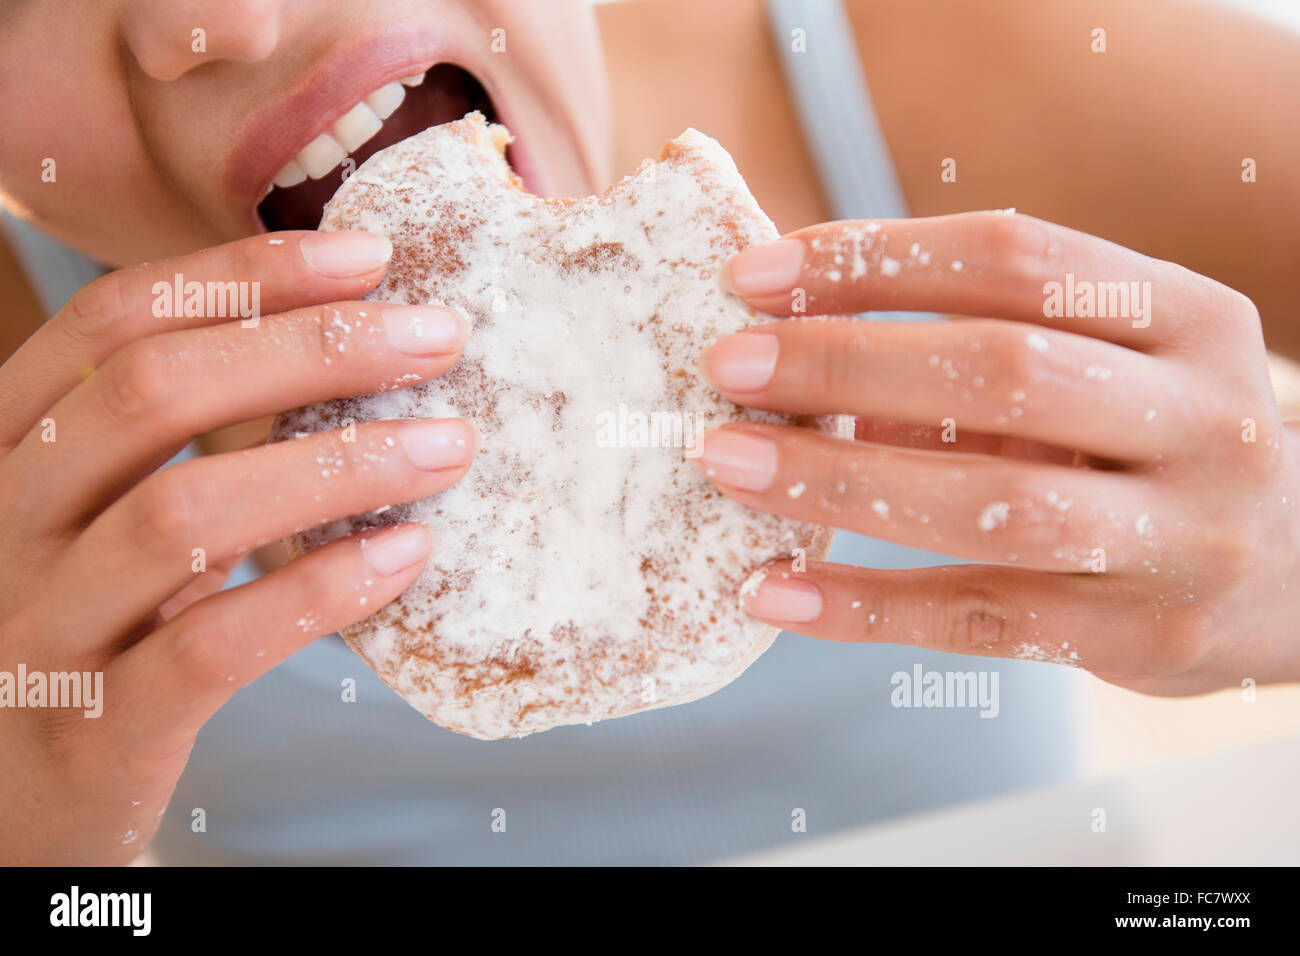 Close up of Hispanic woman eating donut Stock Photo